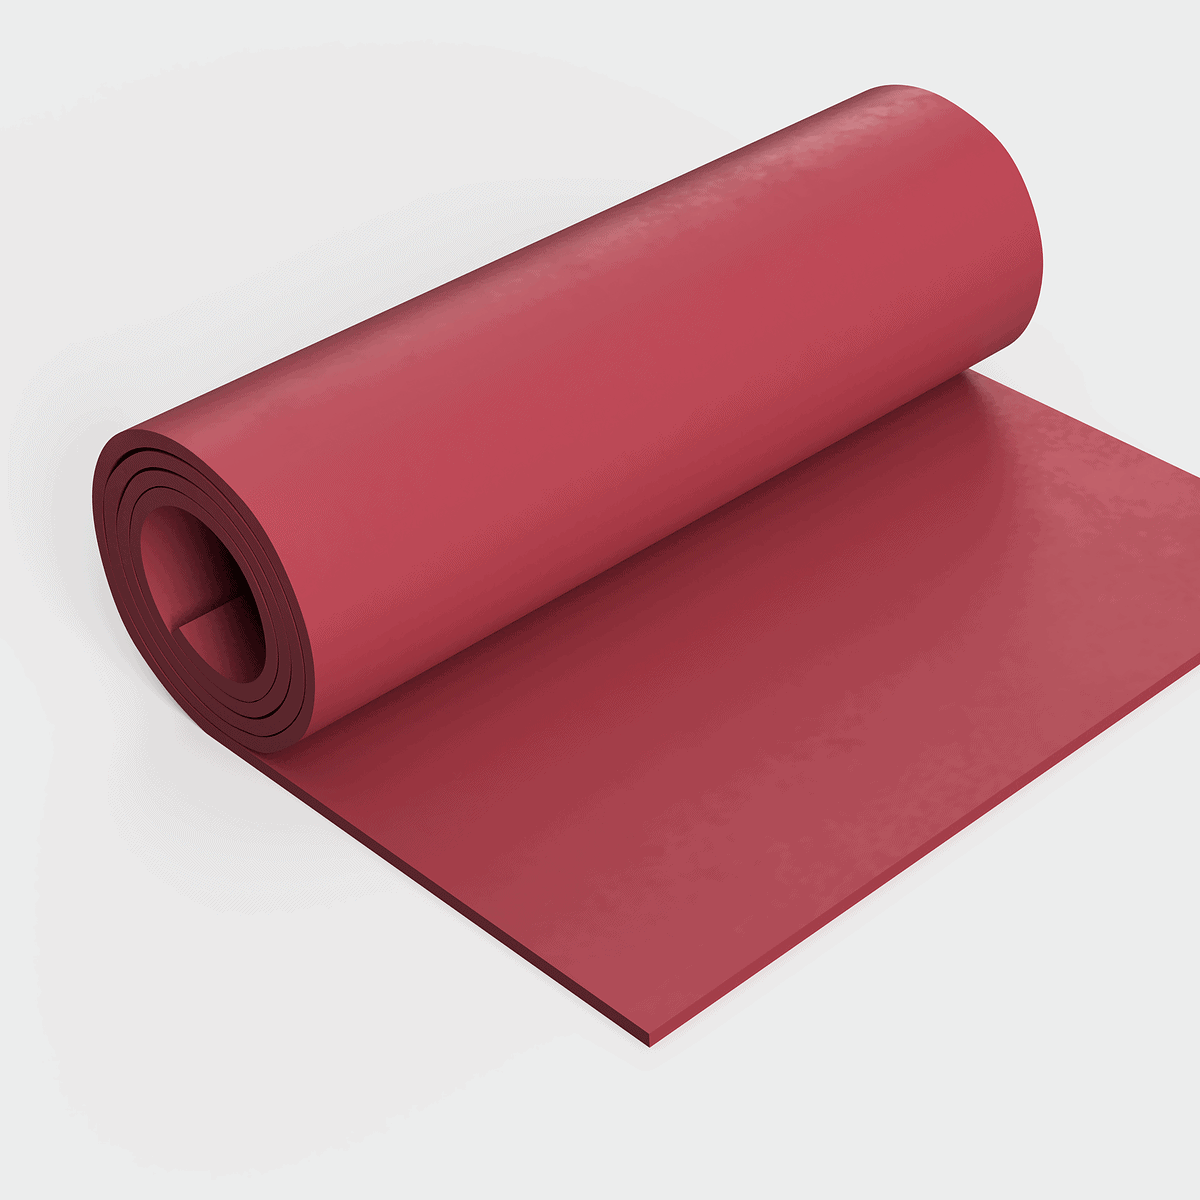 Silicone rubber red